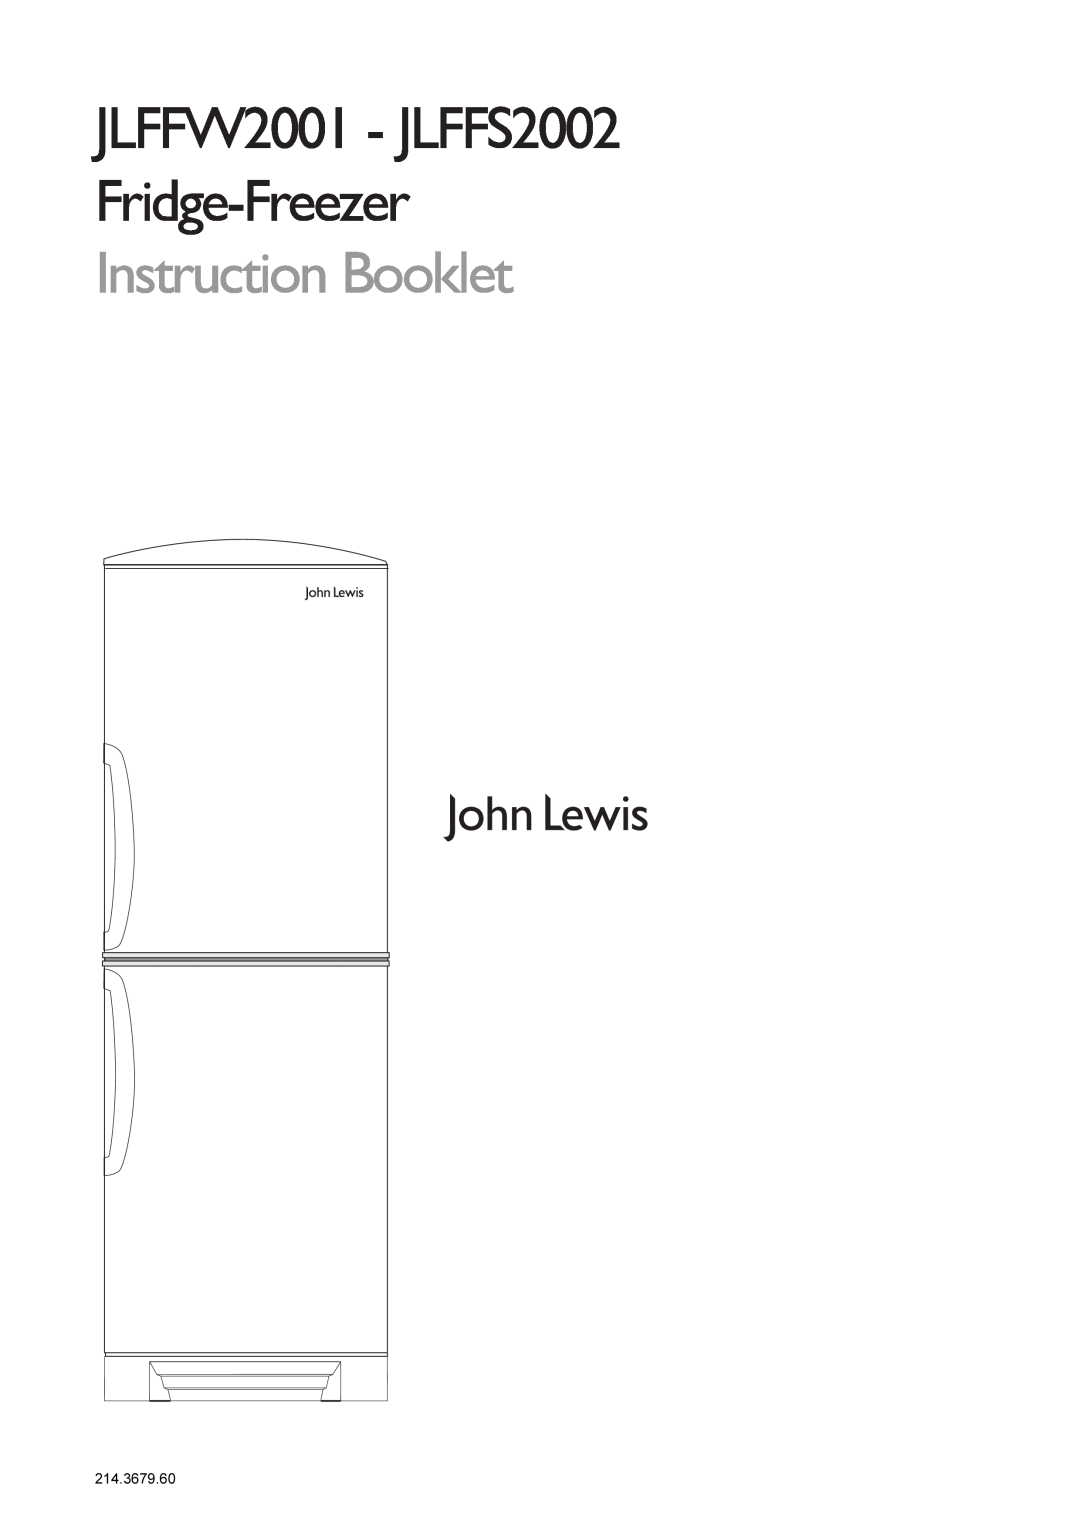 John Lewis manual JLFFW2001 - JLFFS2002 Fridge-Freezer, Instruction Booklet 